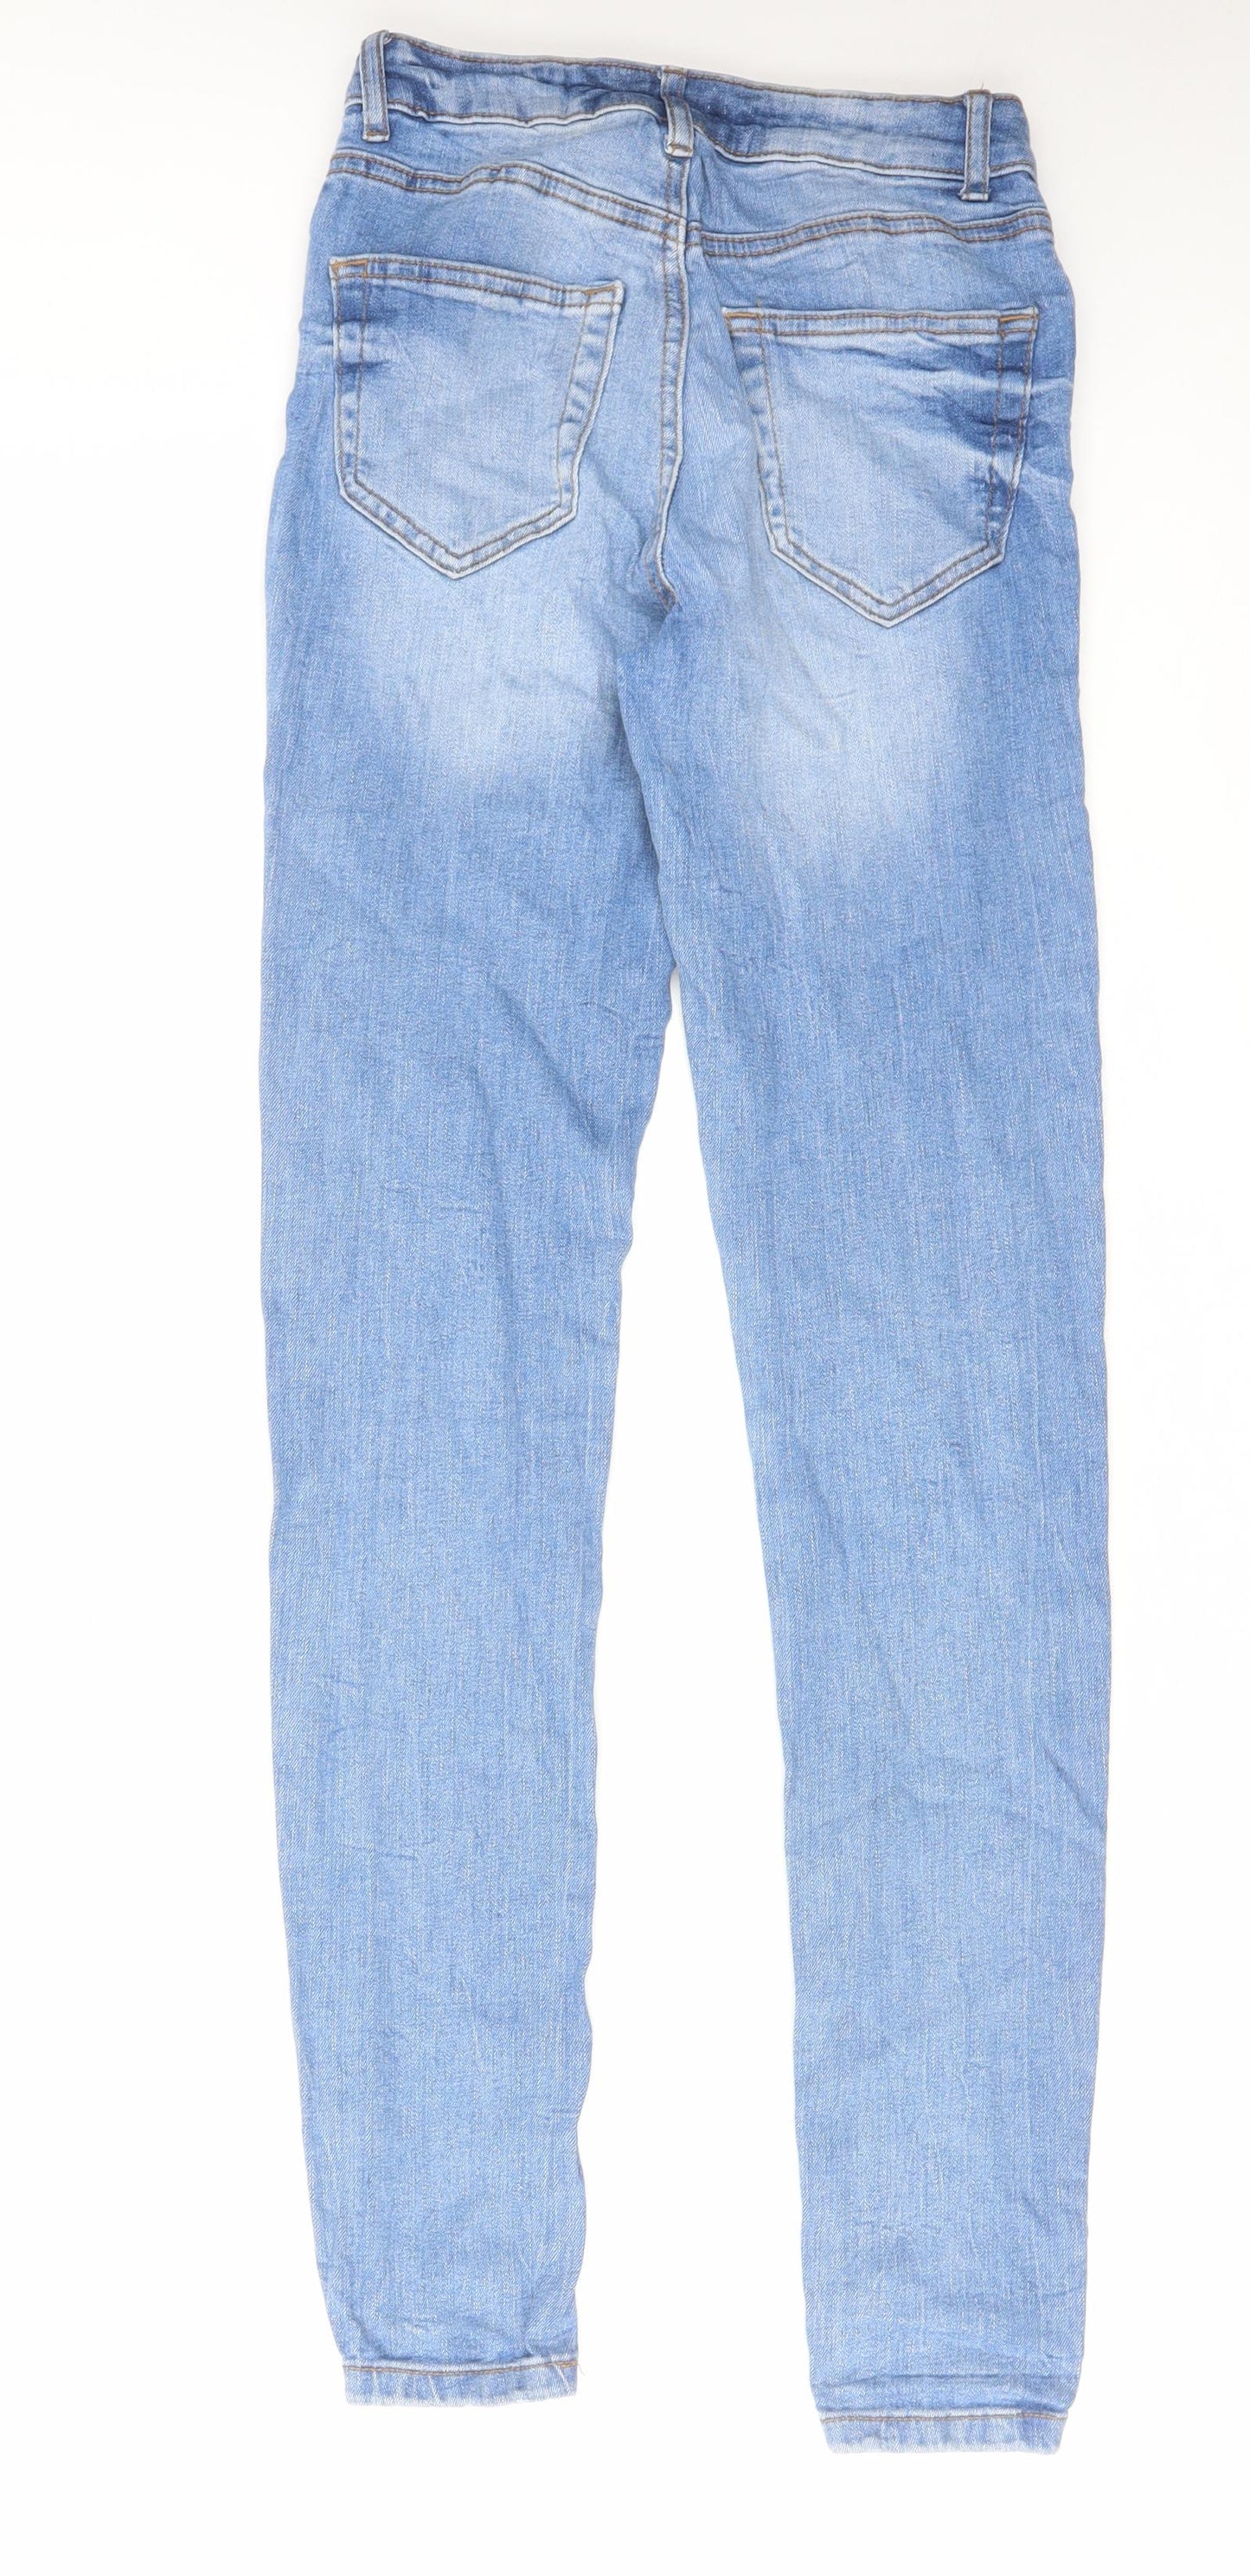 Denim & Co. Womens Blue Cotton Skinny Jeans Size 6 L31 in Regular Zip